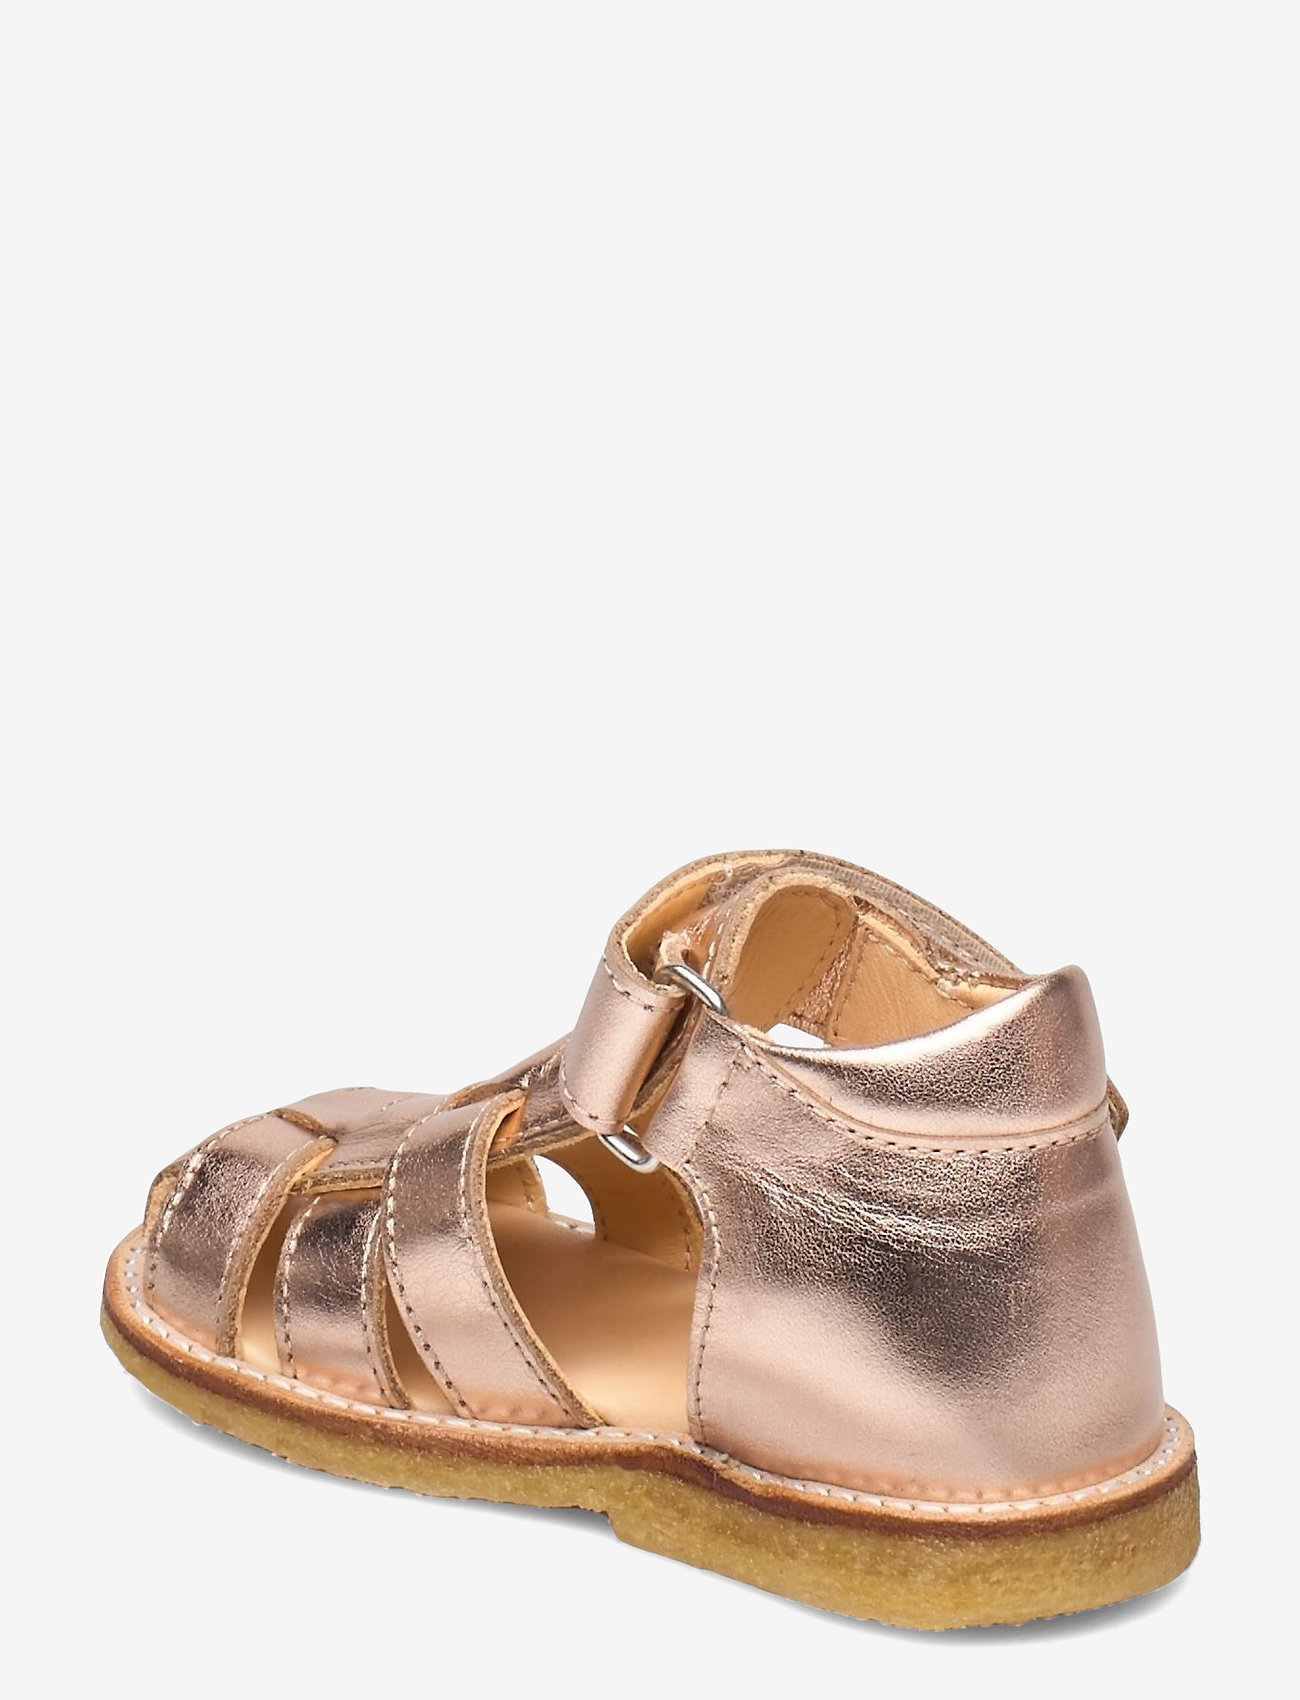 Viva spejl strejke ANGULUS Sandals - Flat - Closed Toe - (1311 Rose Copper) - 486.85 kr |  Boozt.com